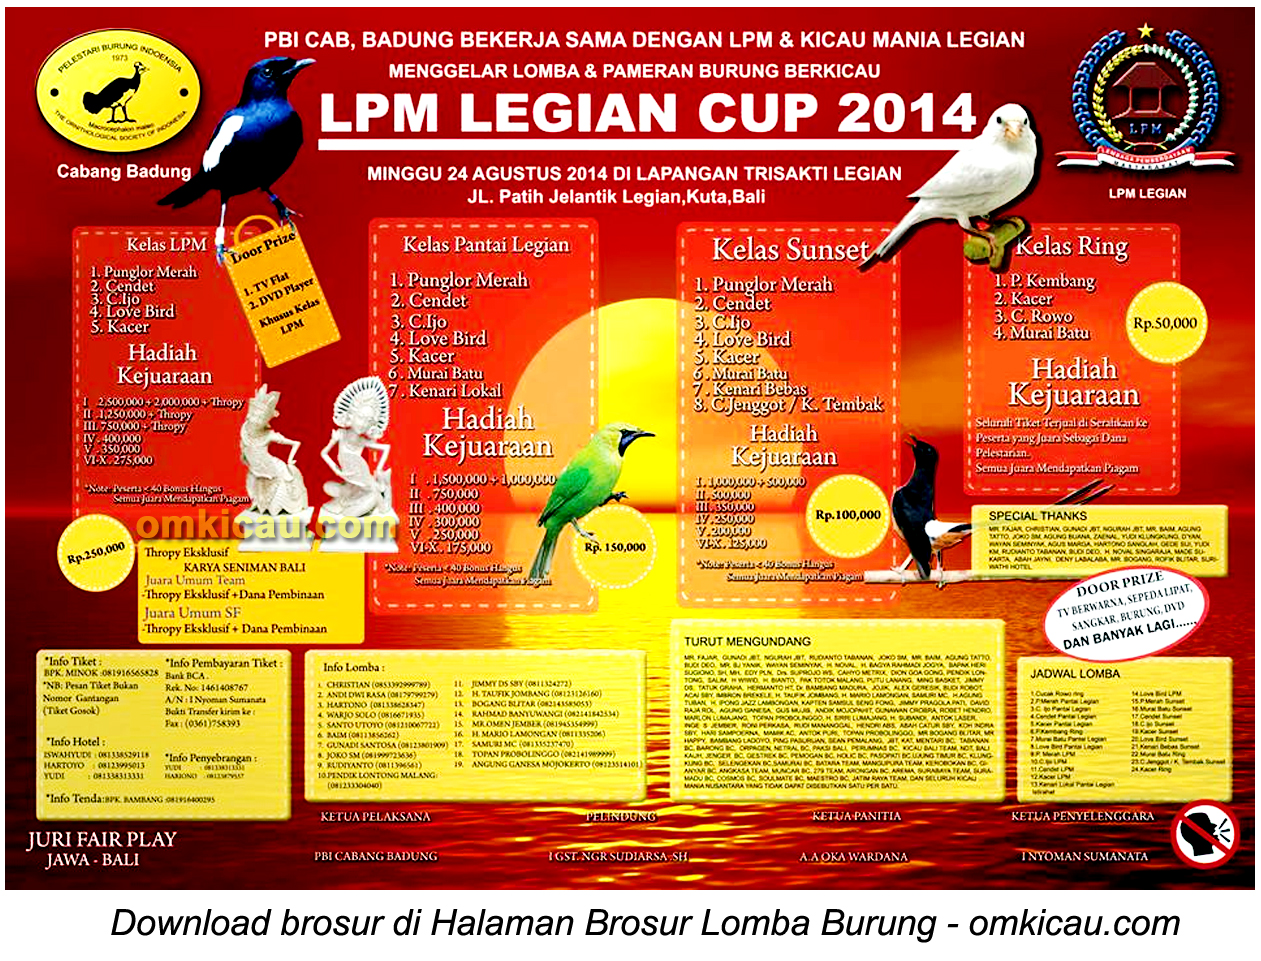 Brosur Lomba Burung Berkicau LPM Legian Cup, Kuta, 24 Agustus 2014